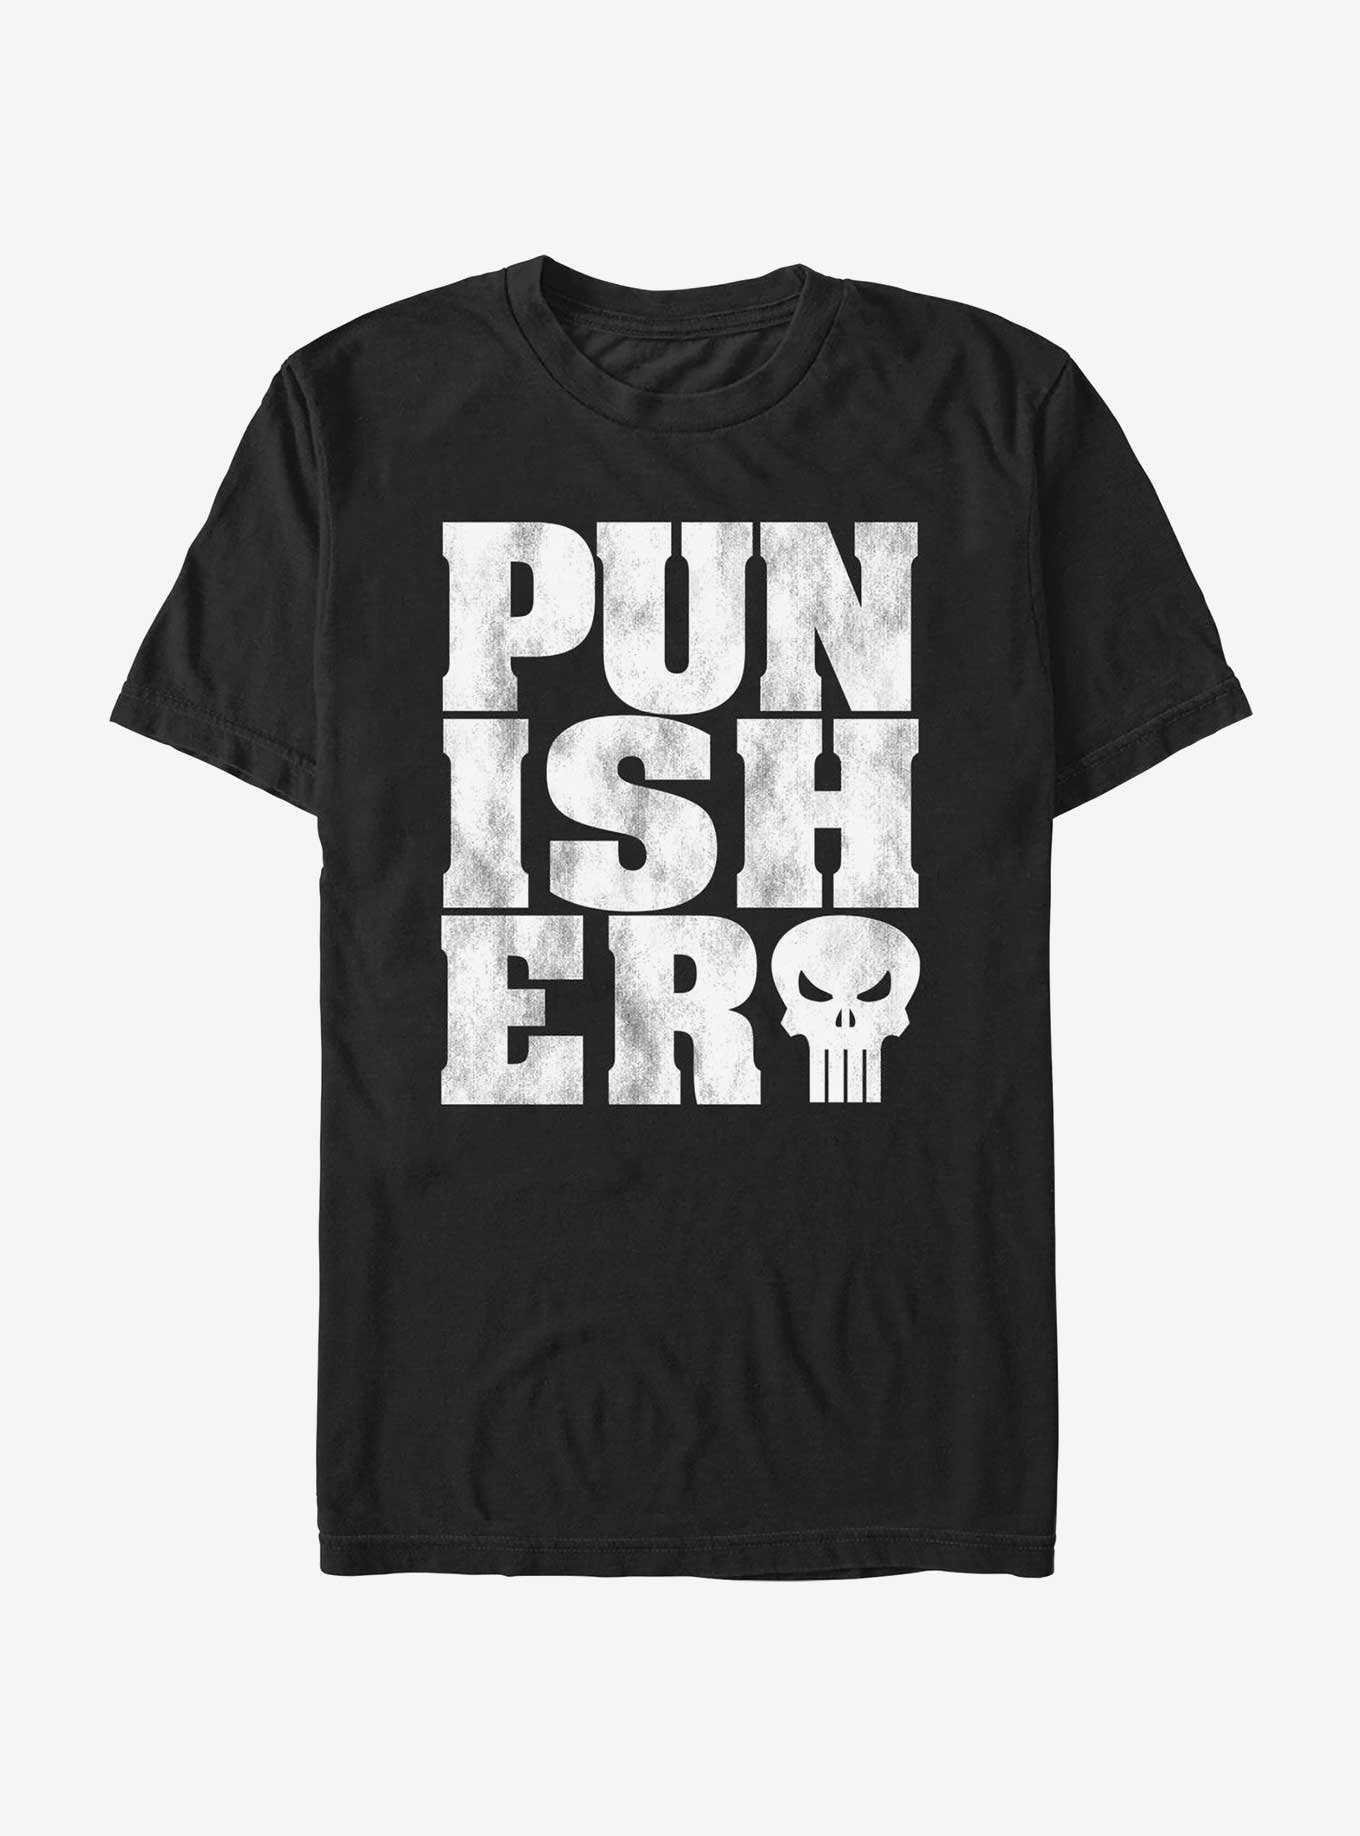 Marvel The Punisher Punished Type T-Shirt, , hi-res